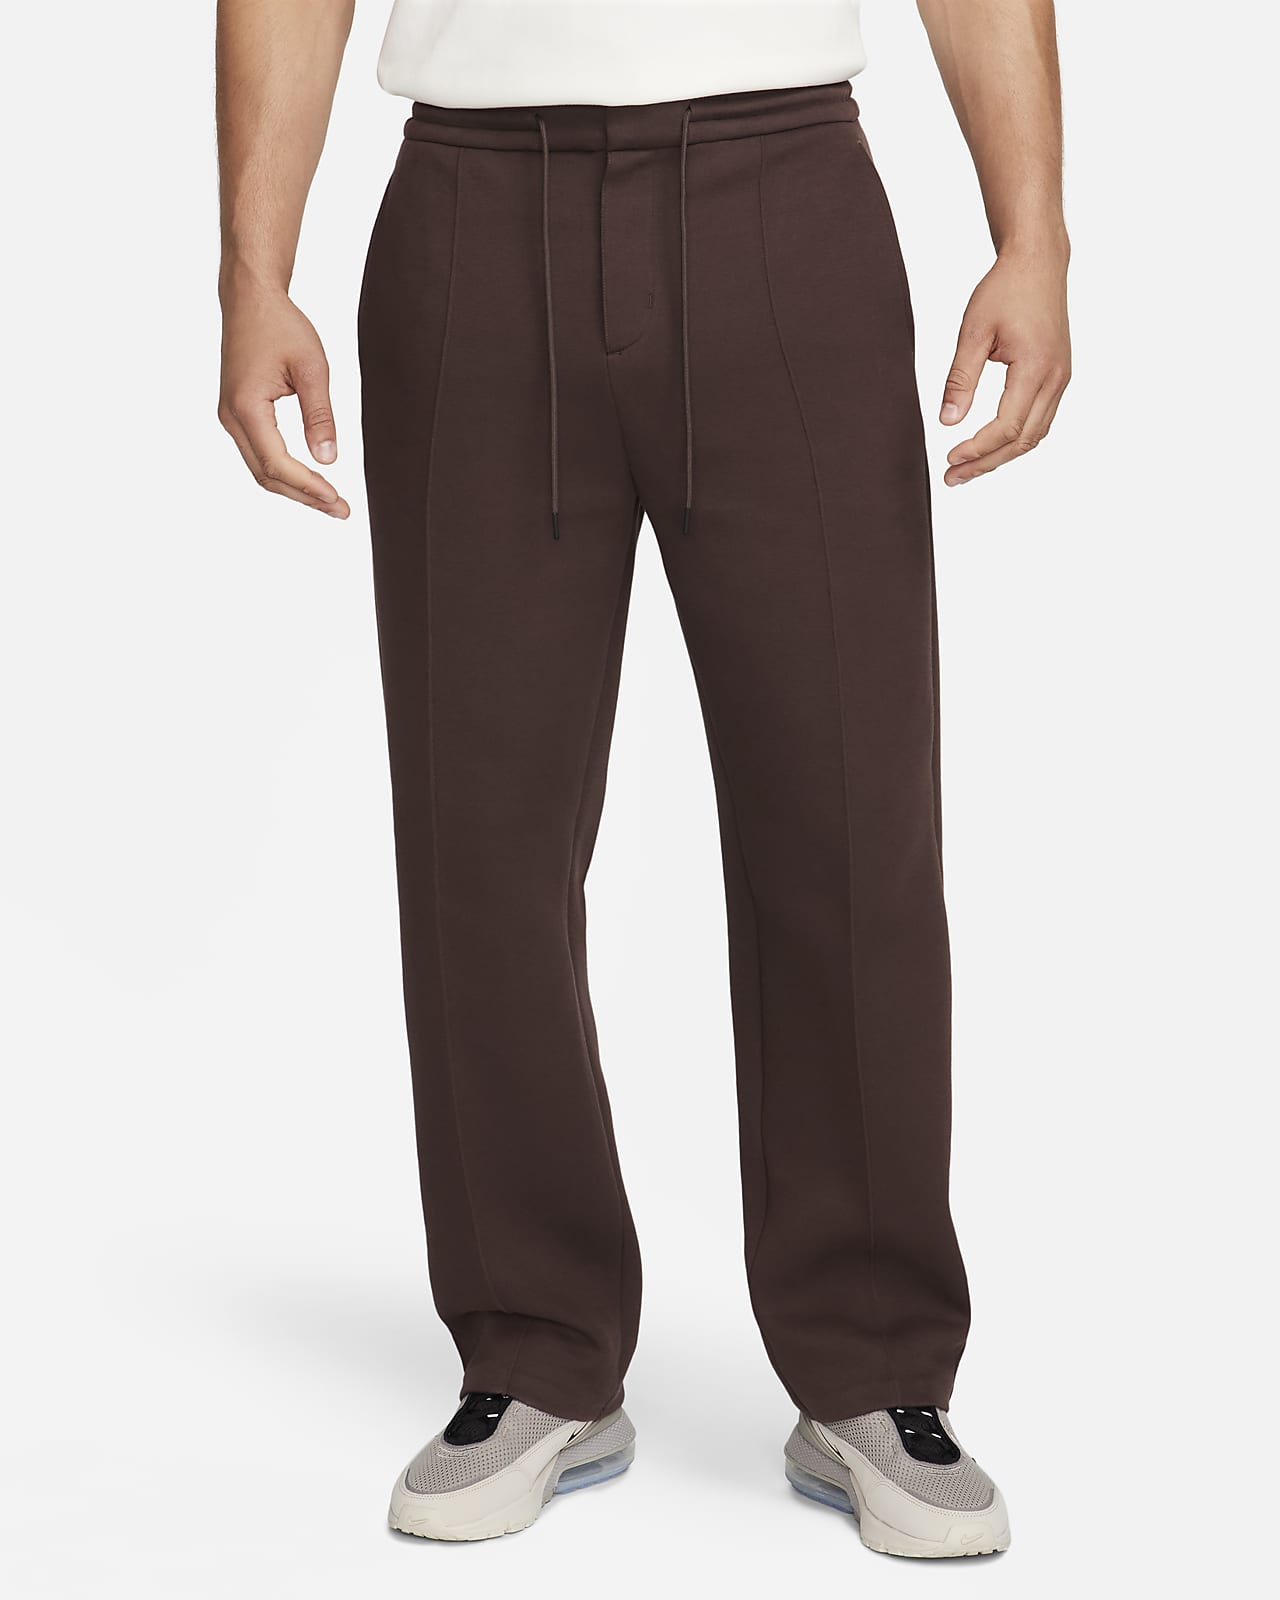 NEW! Nike Threma-Fit Open Hem Fitness Track Pants Grey Men's Size Large |  eBay